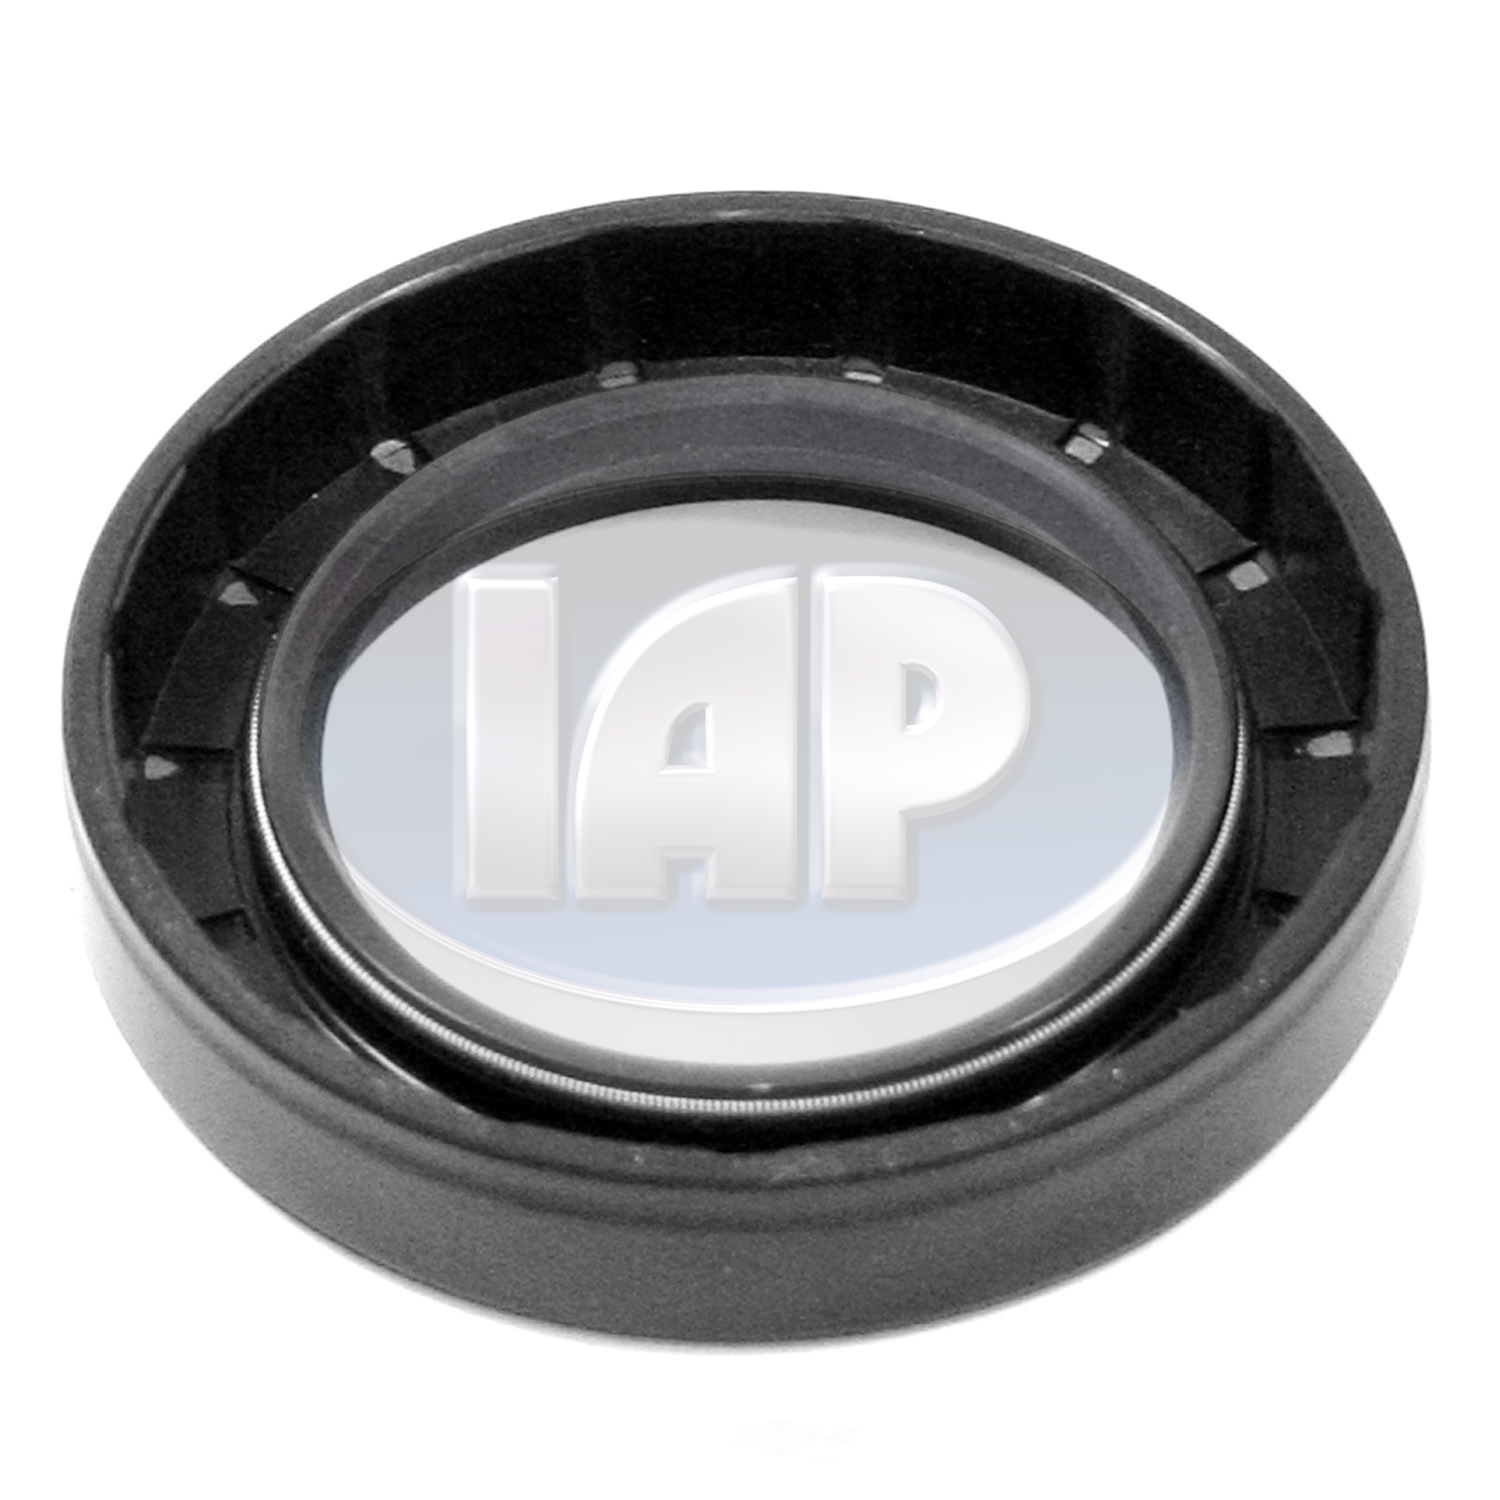 IAP/KUHLTEK MOTORWERKS - Wheel Seal (Front Left) - KMS 111405641A